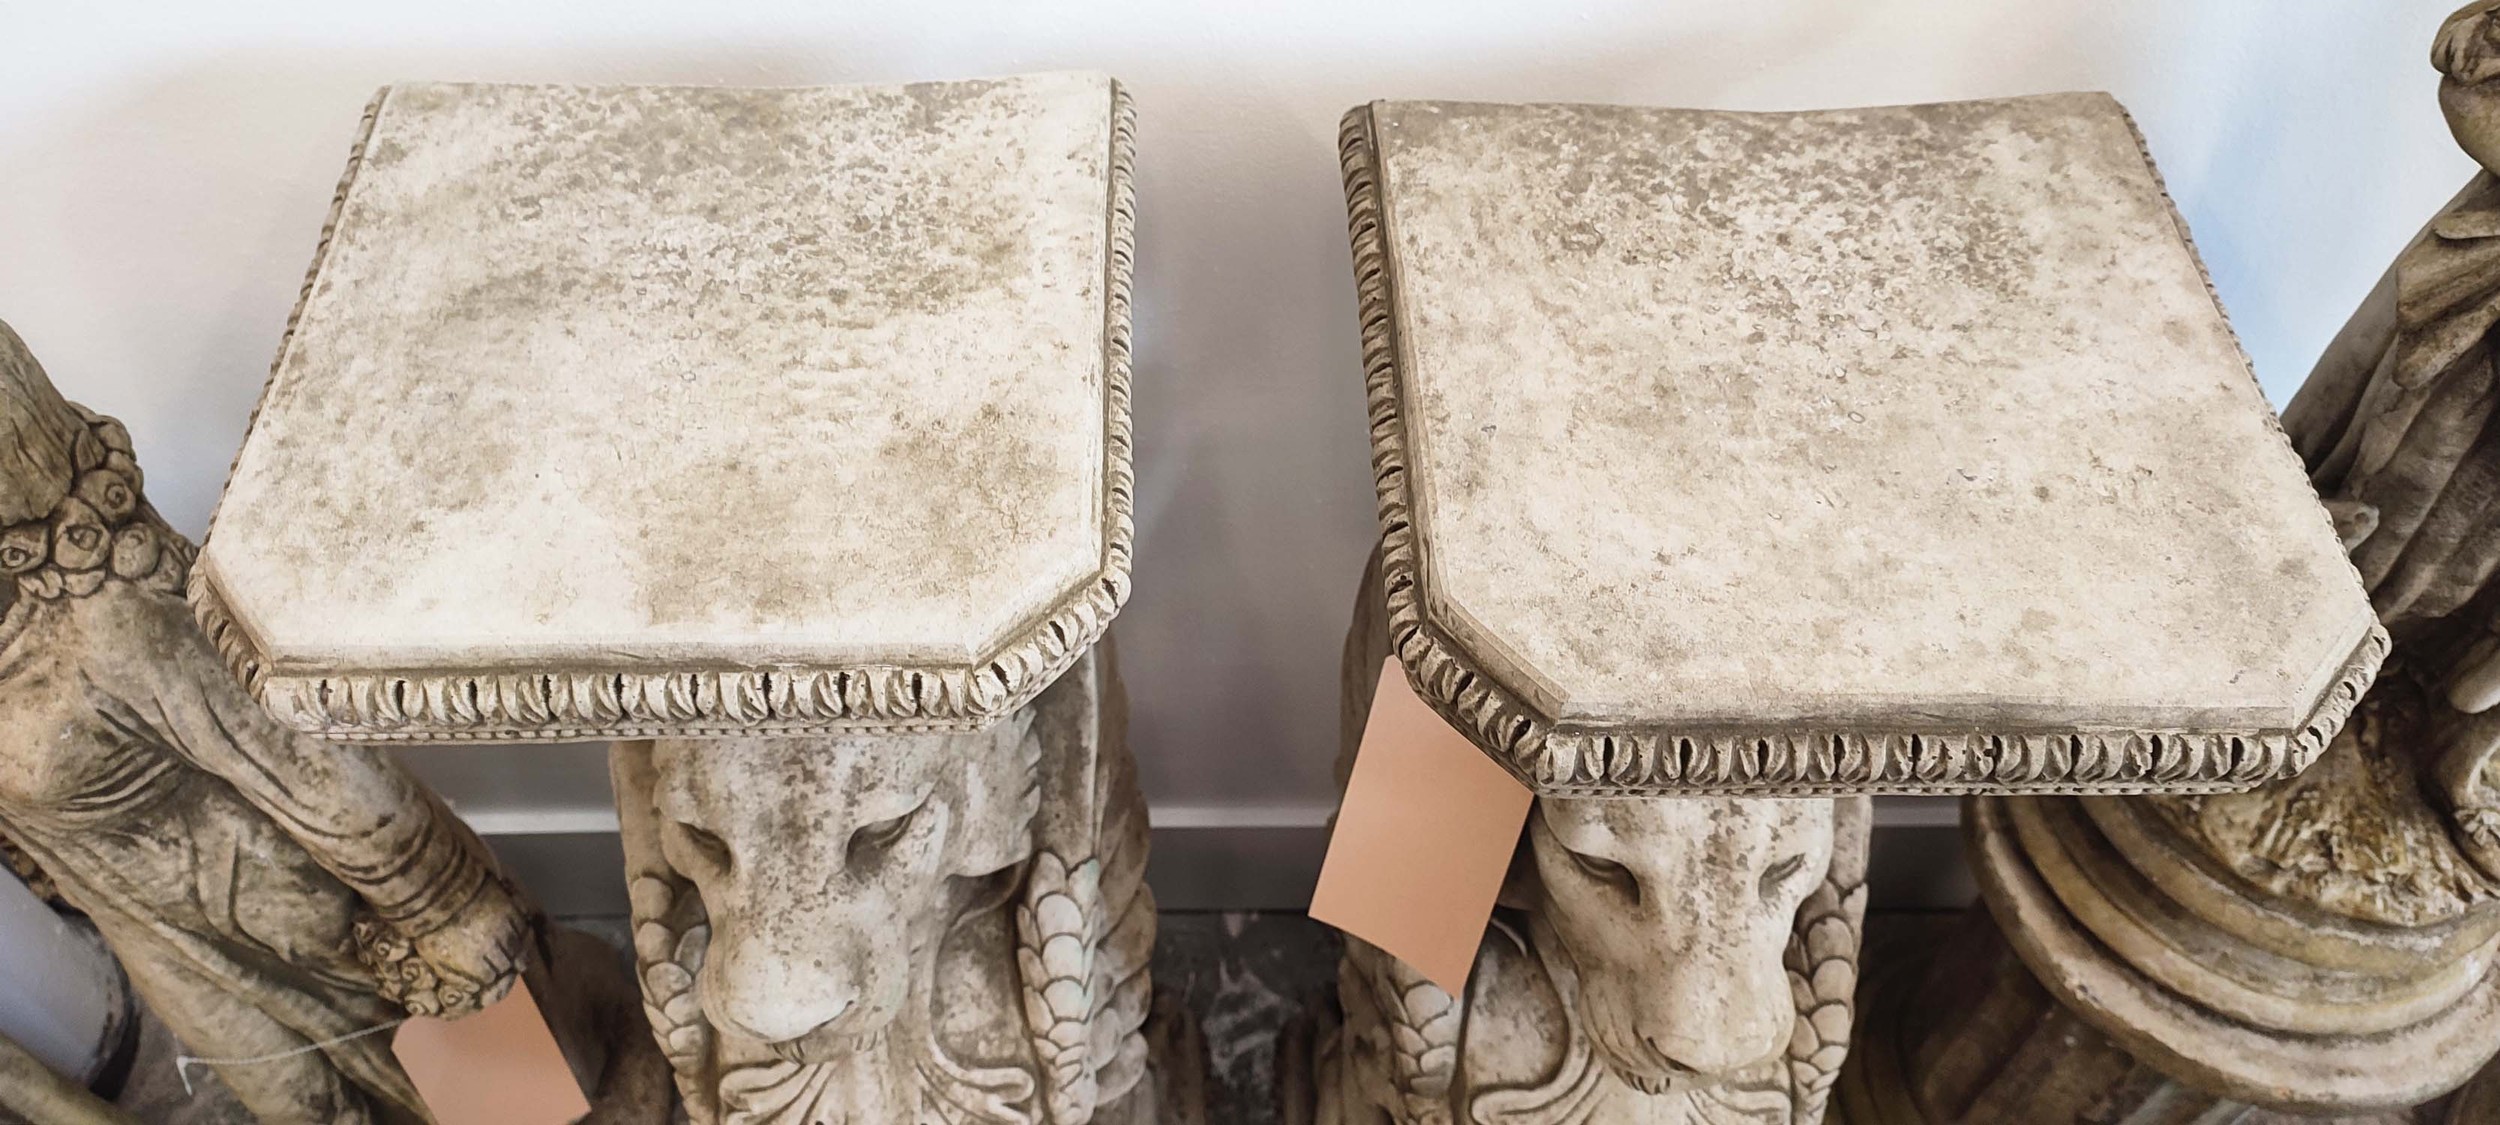 WINGED LION PEDESTALS, a pair, composite stone, 77.5cm H. (2) - Image 4 of 4